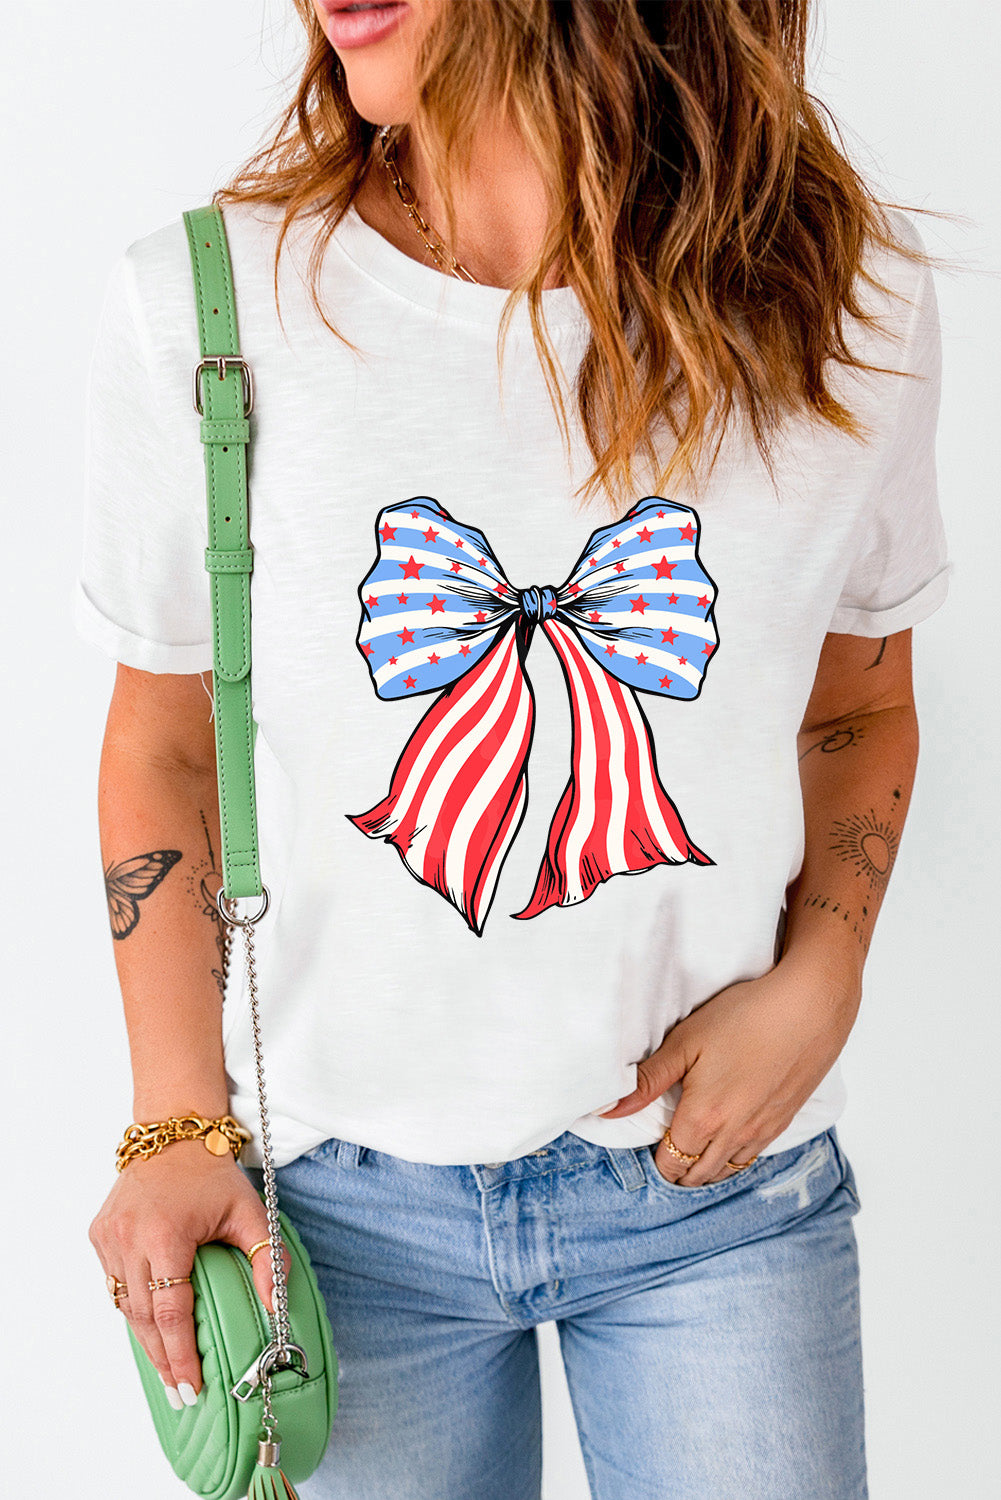 Bow Flag Patriotic Women's Short Sleeve Graphic T-Shirt - Sydney So Sweet